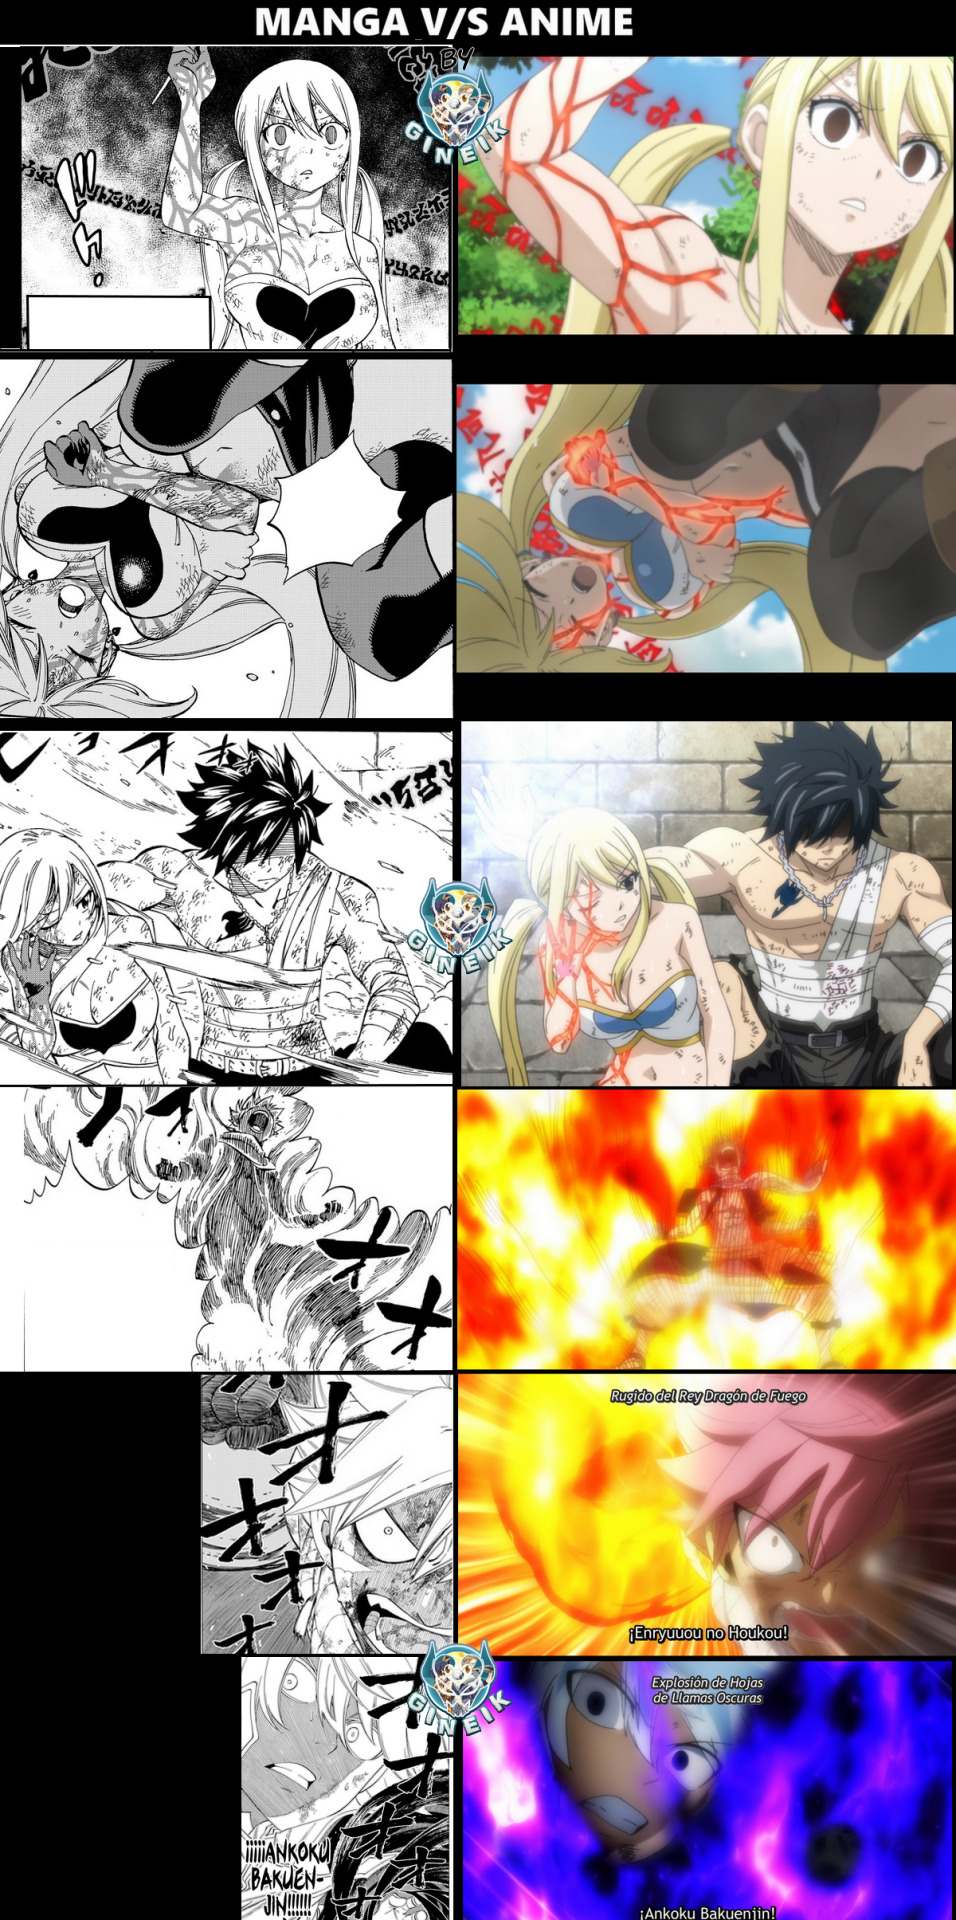 Anime Quality Comparison